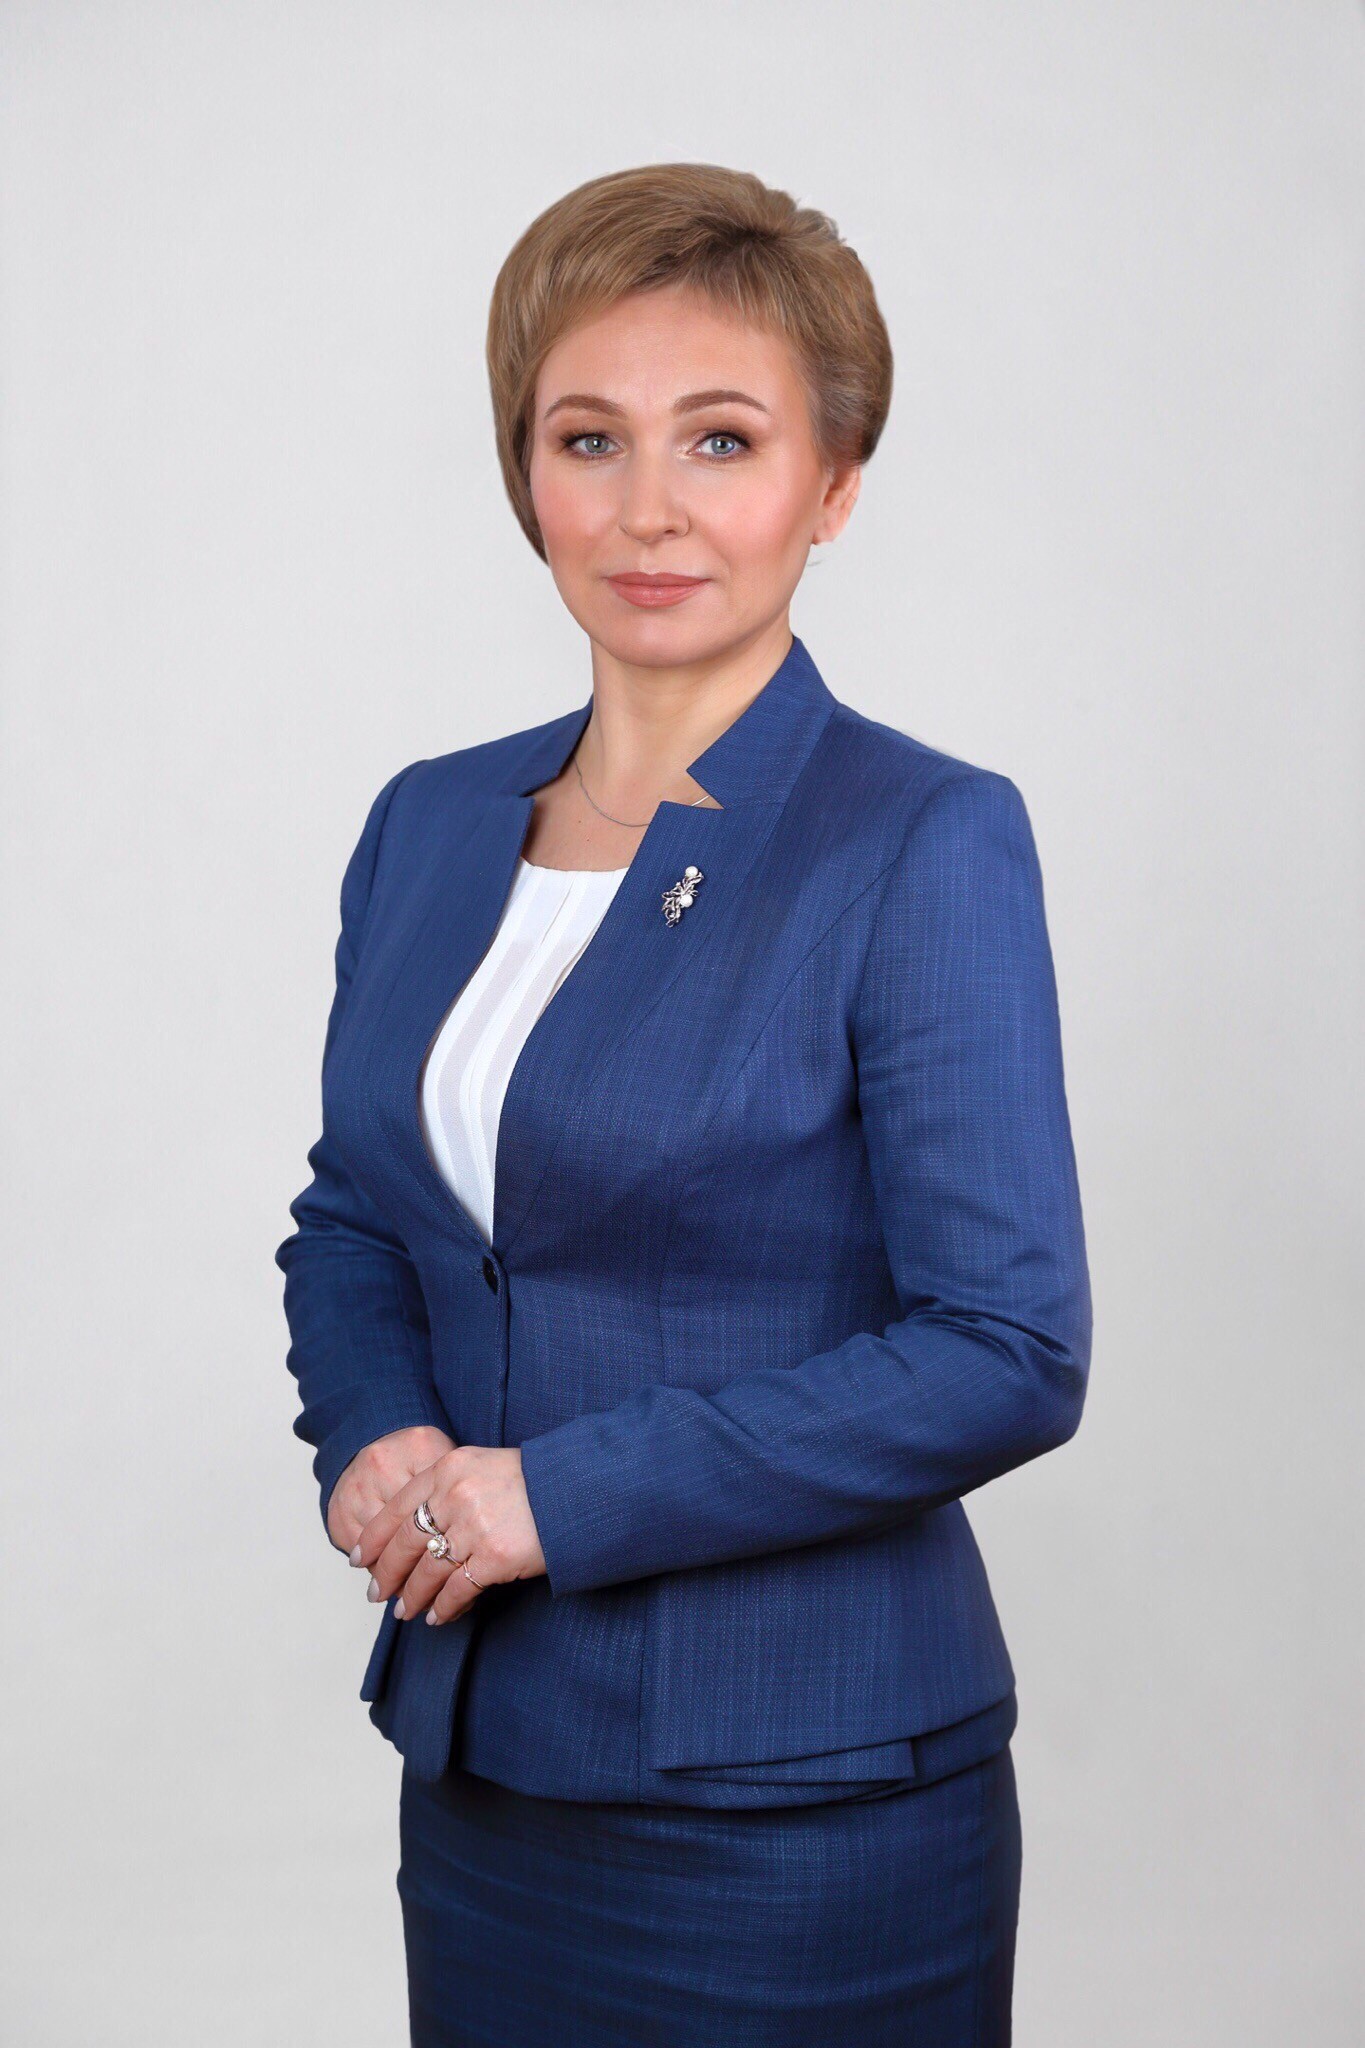 Бизнесвумен и политик — Ольга Петунина. Фото © VK / Ольга Петунина